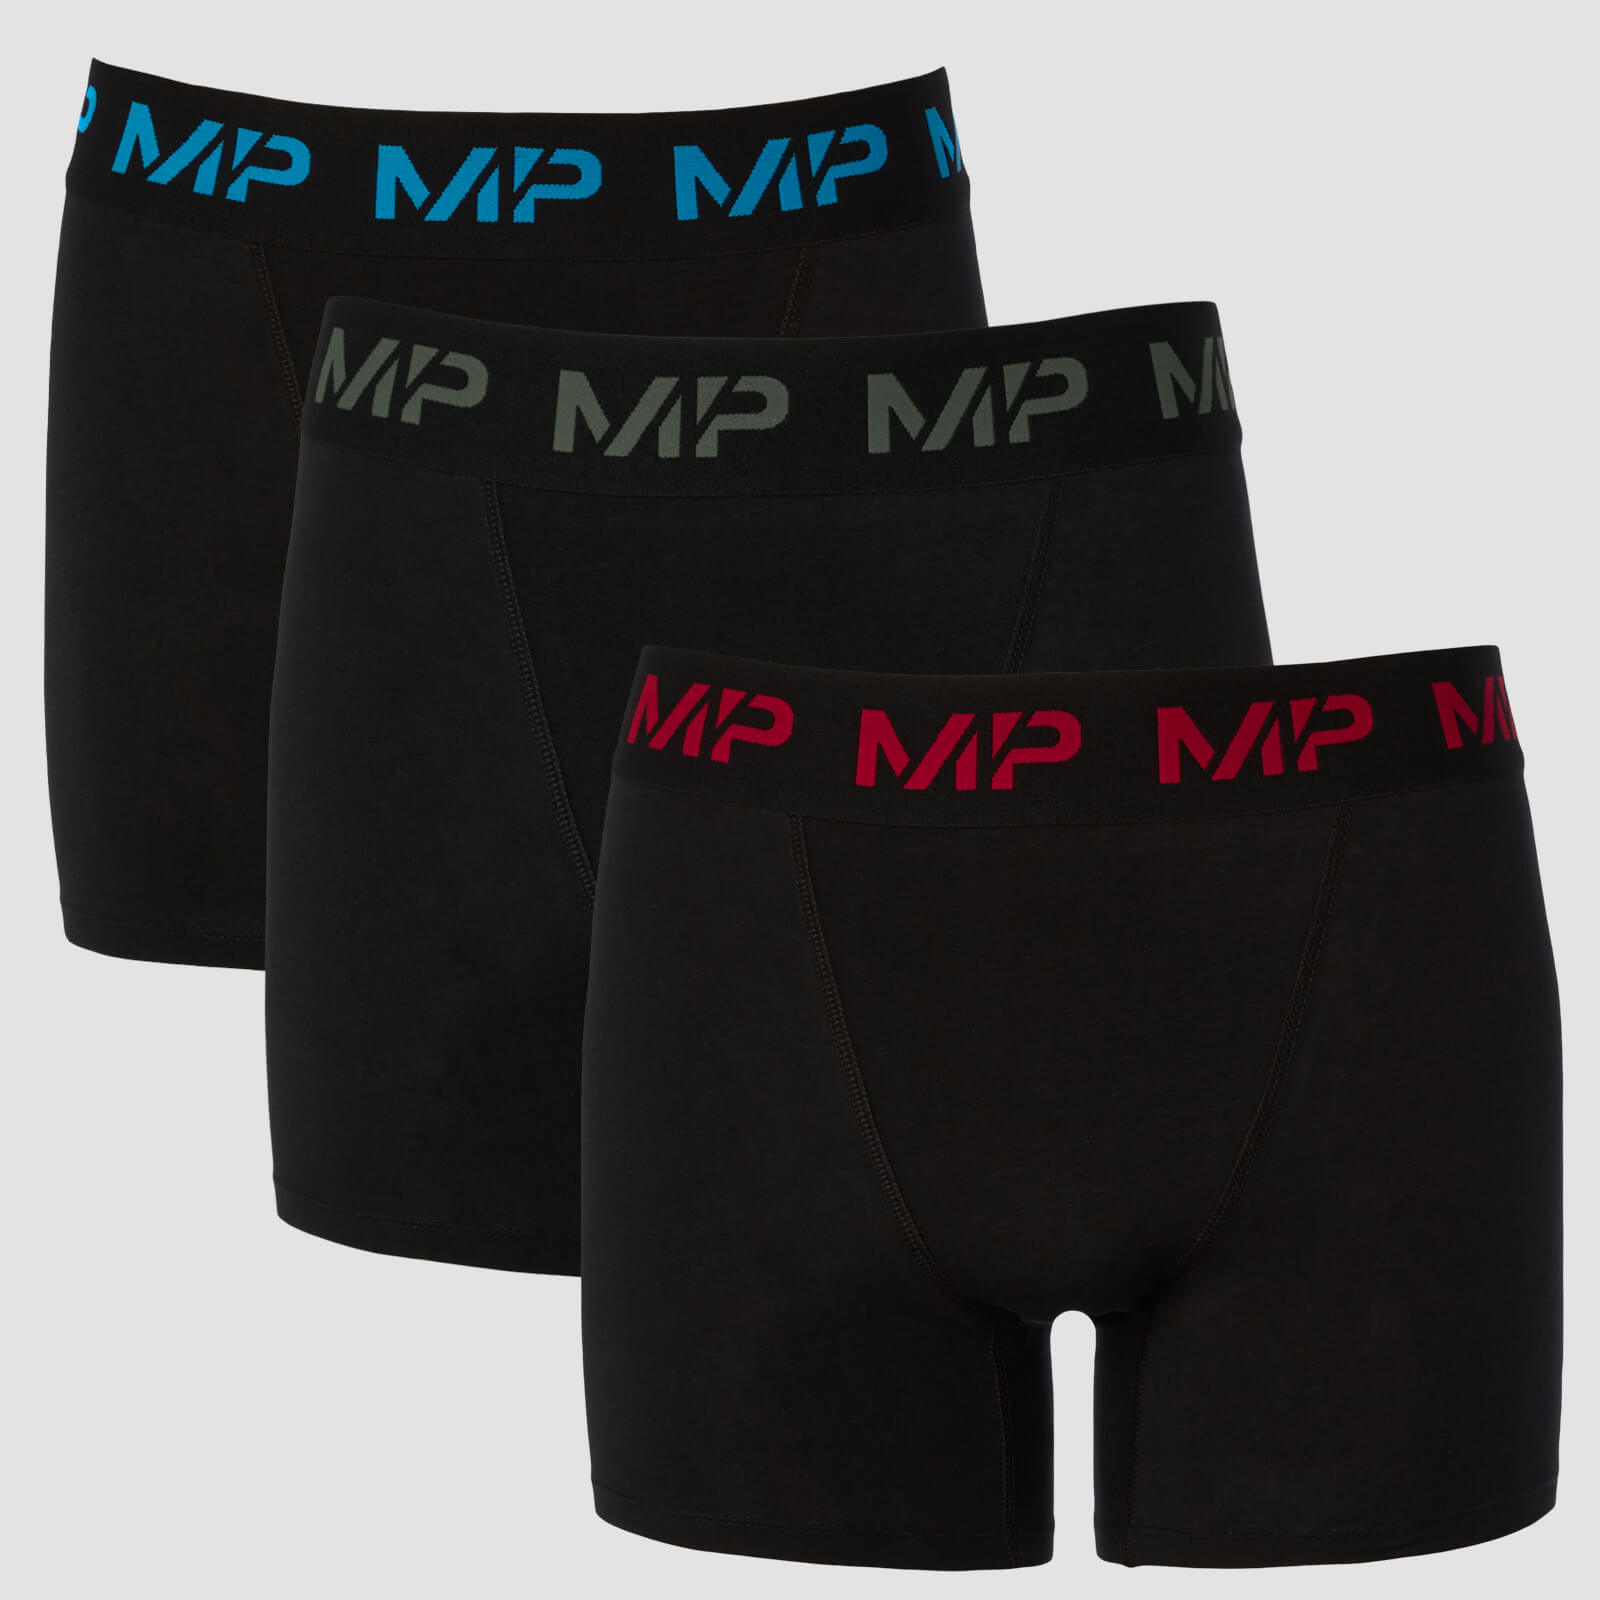 MP Men's Coloured logo Boxers (3 Pack) - Wine/Cactus/Bright Blue - XXS